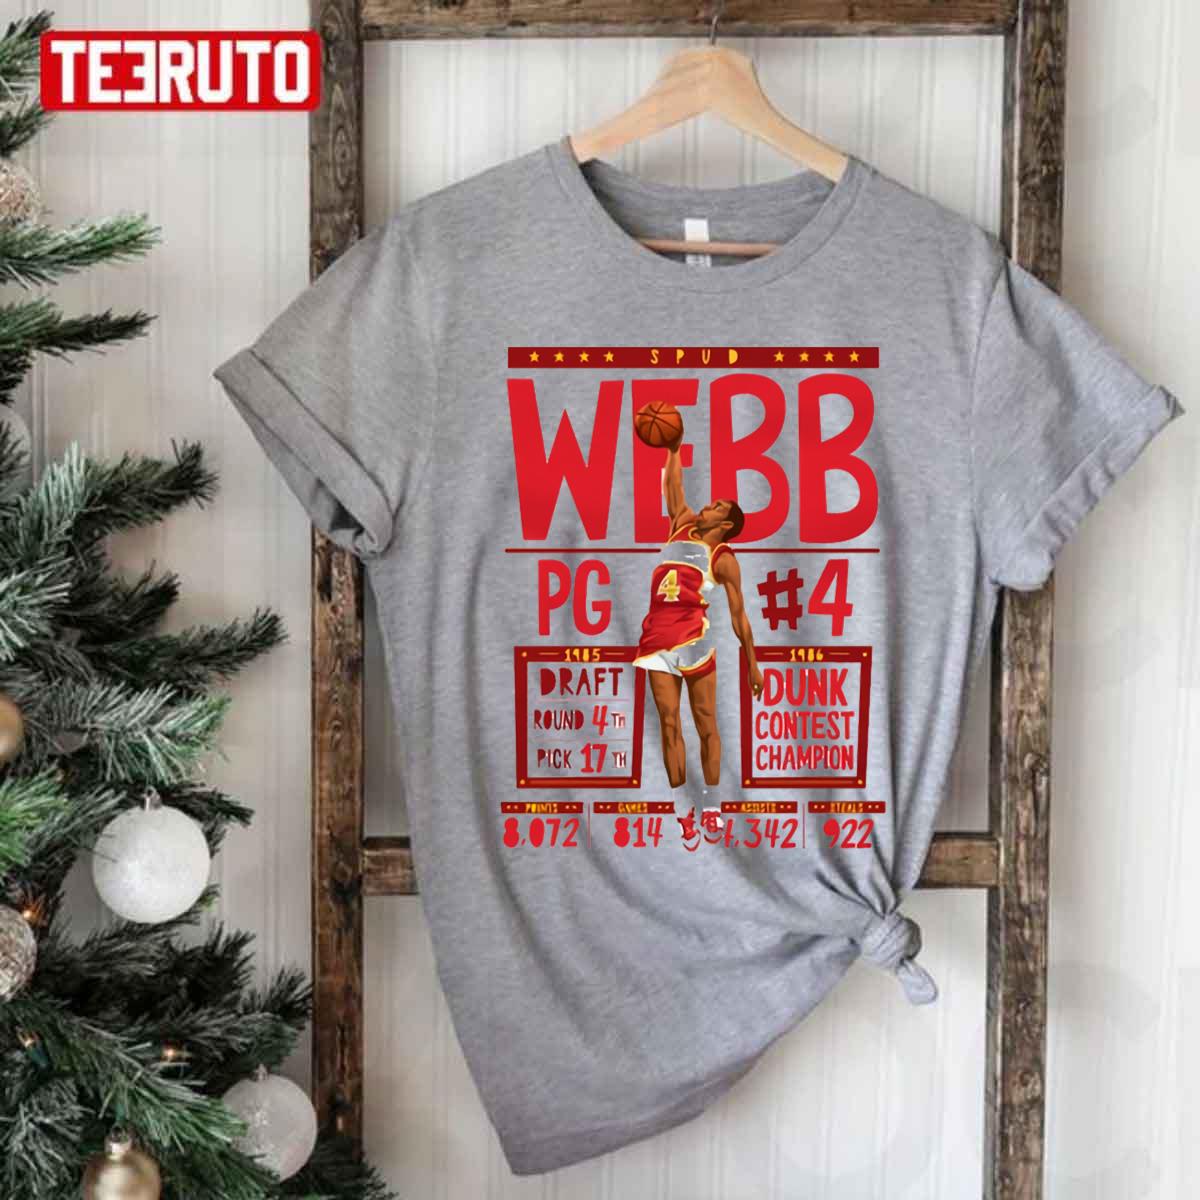 spud webb shirt